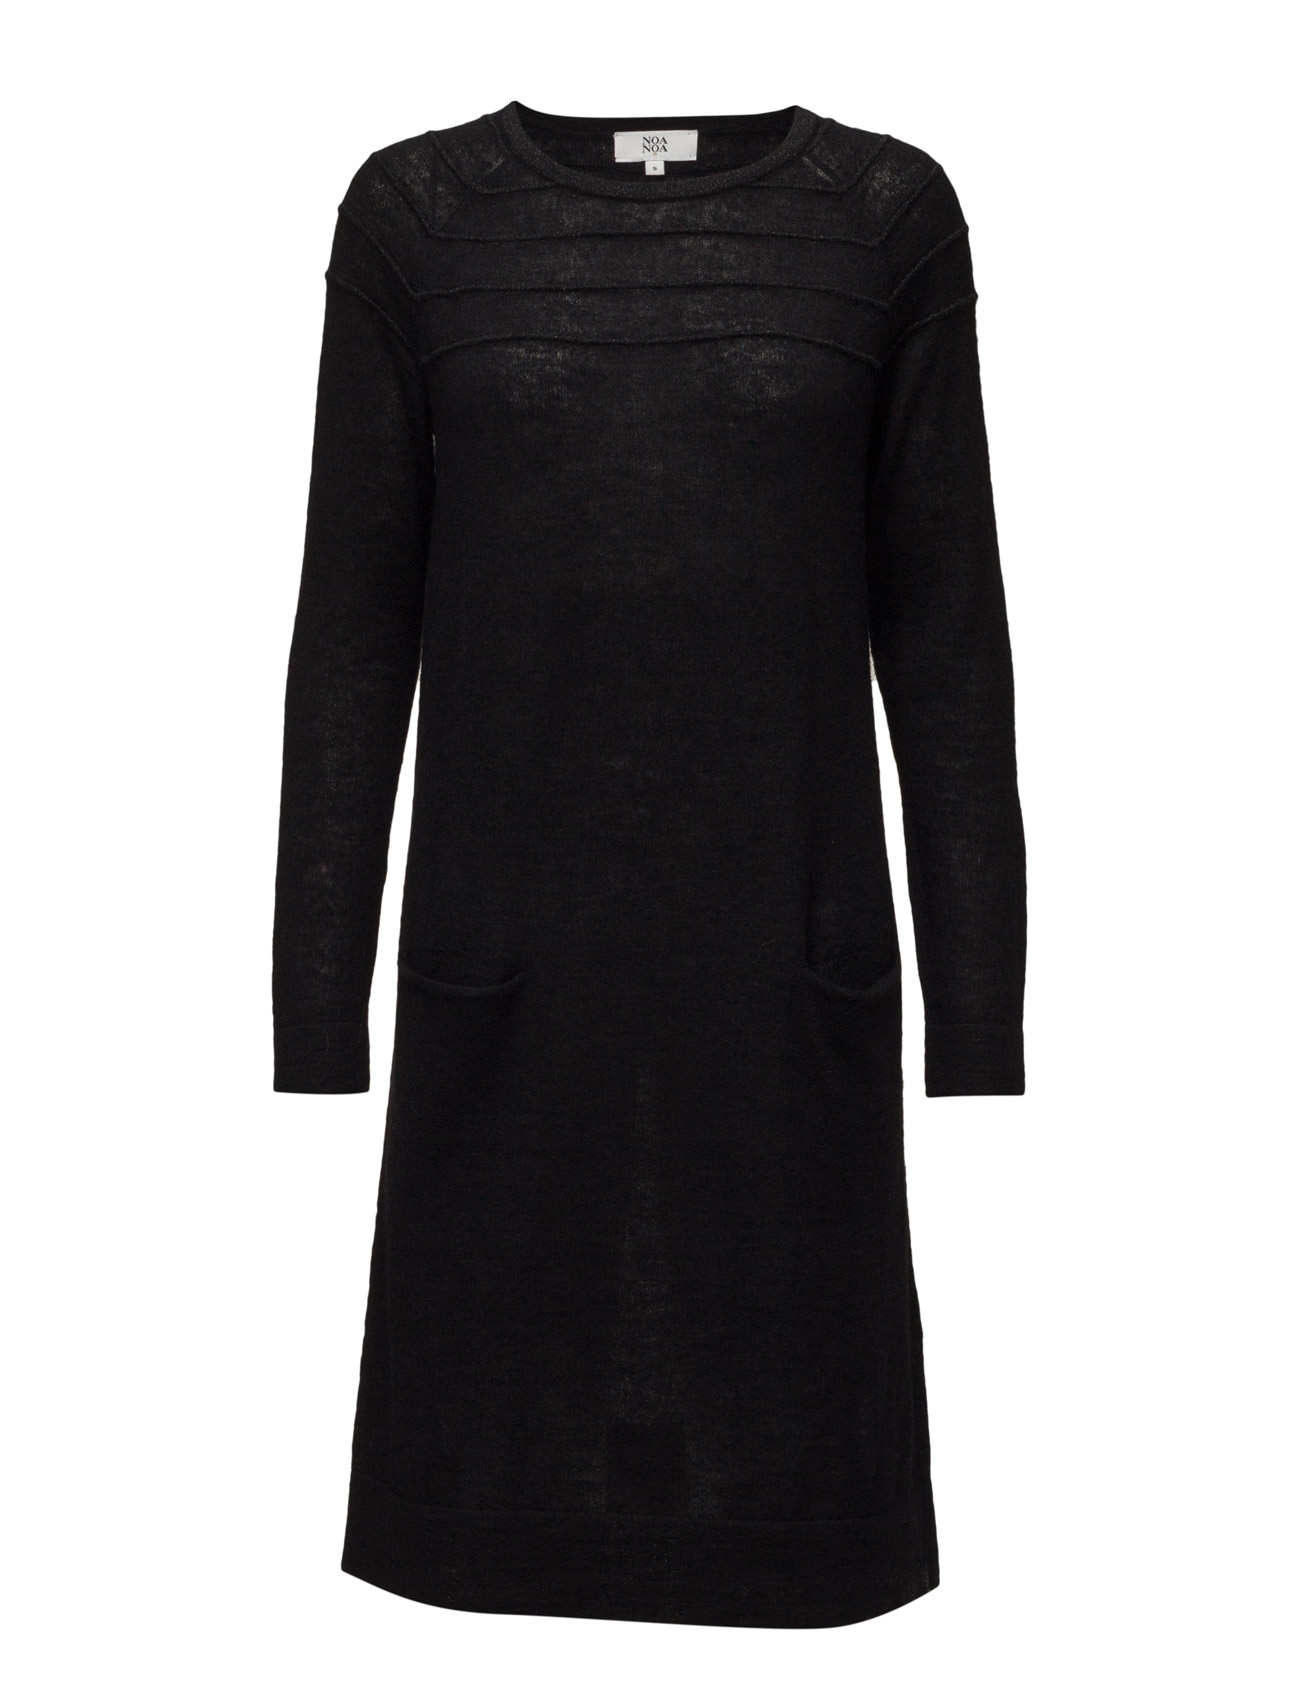 Classic Black Long-Sleeve Dress - cherl12345 (Tamara) Photo (41481654 ...